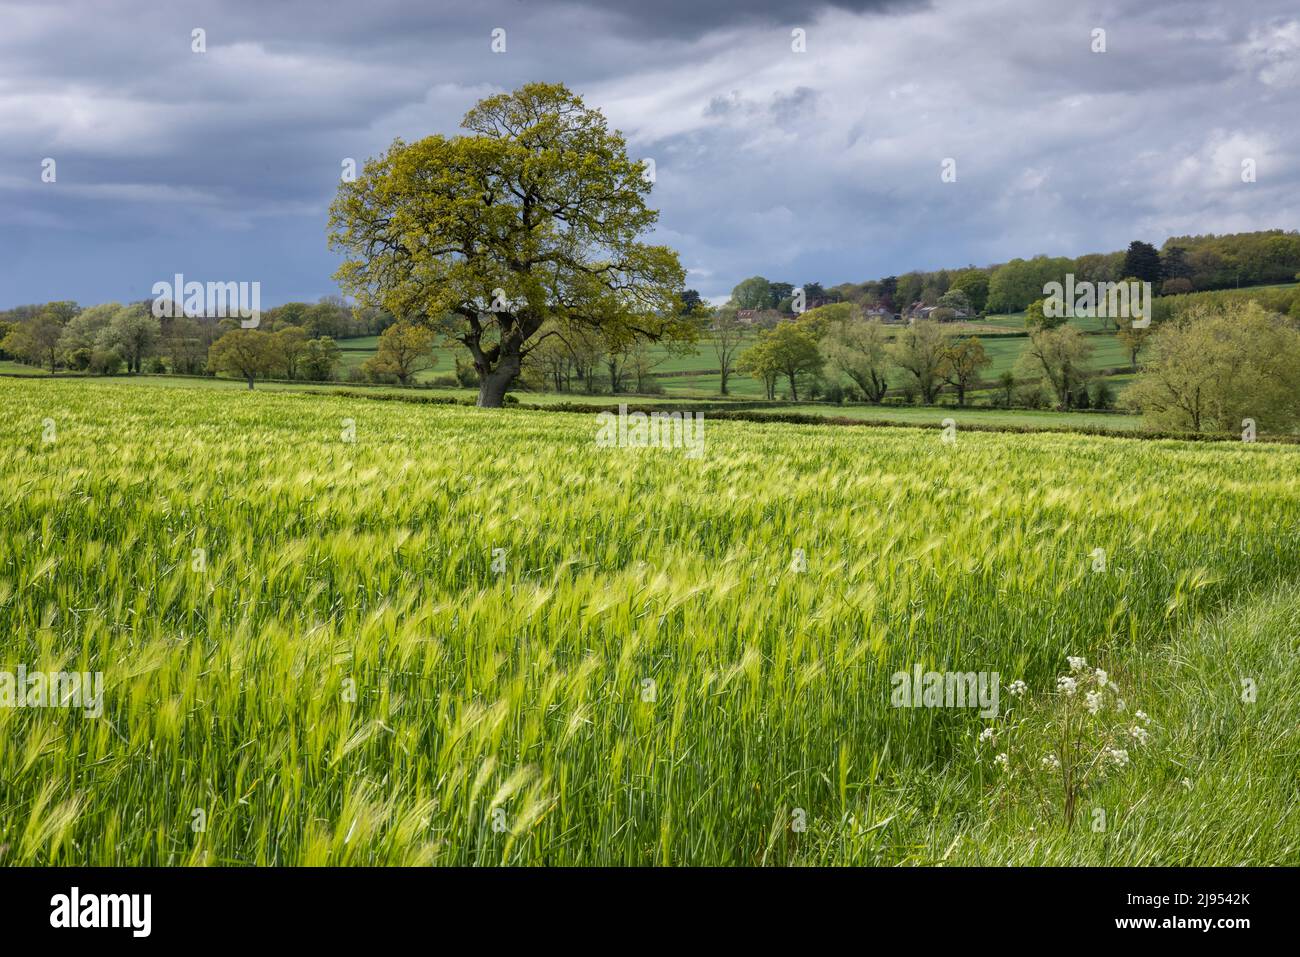 A barley field Purse Caundle, Dorset, England, UK Stock Photo